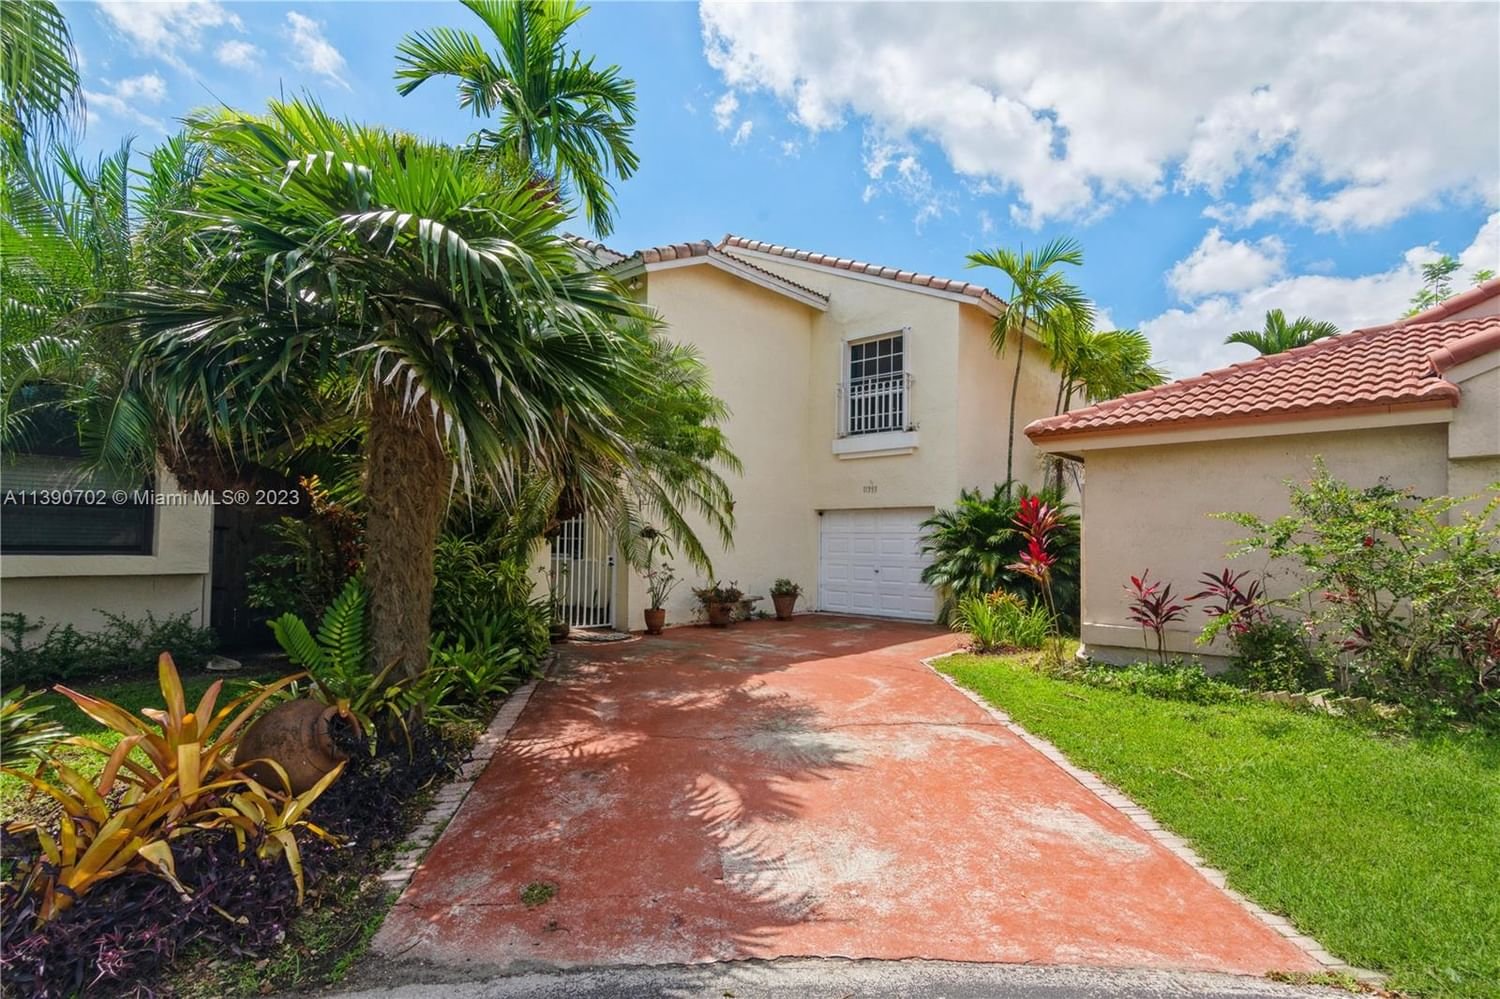 Real estate property located at 11355 158th Ct, Miami-Dade County, Miami, FL